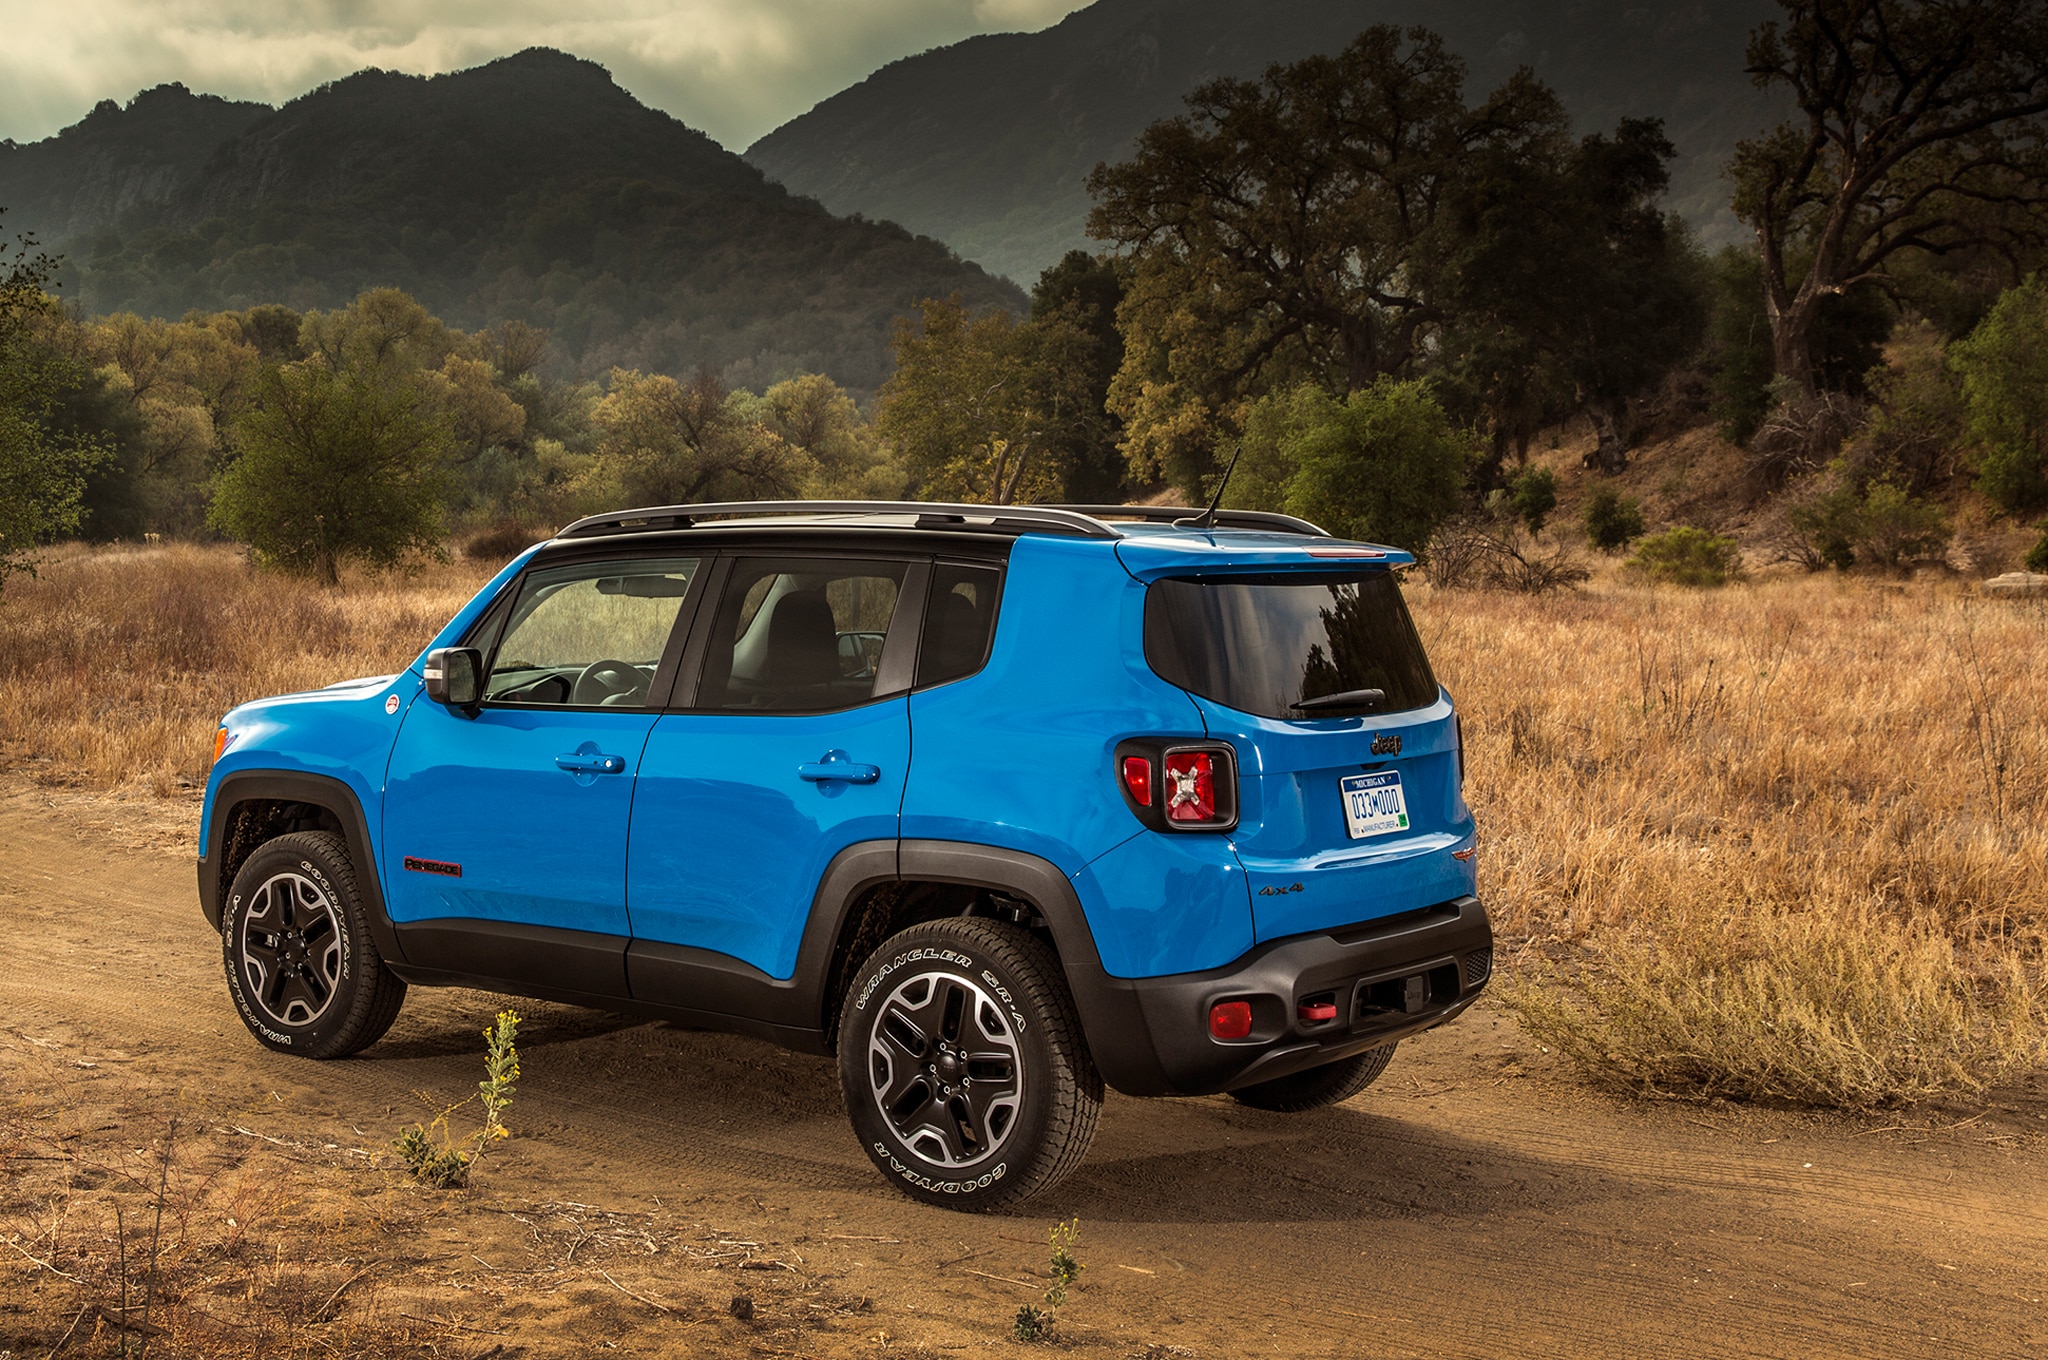 2015 jeep renegade latitude review